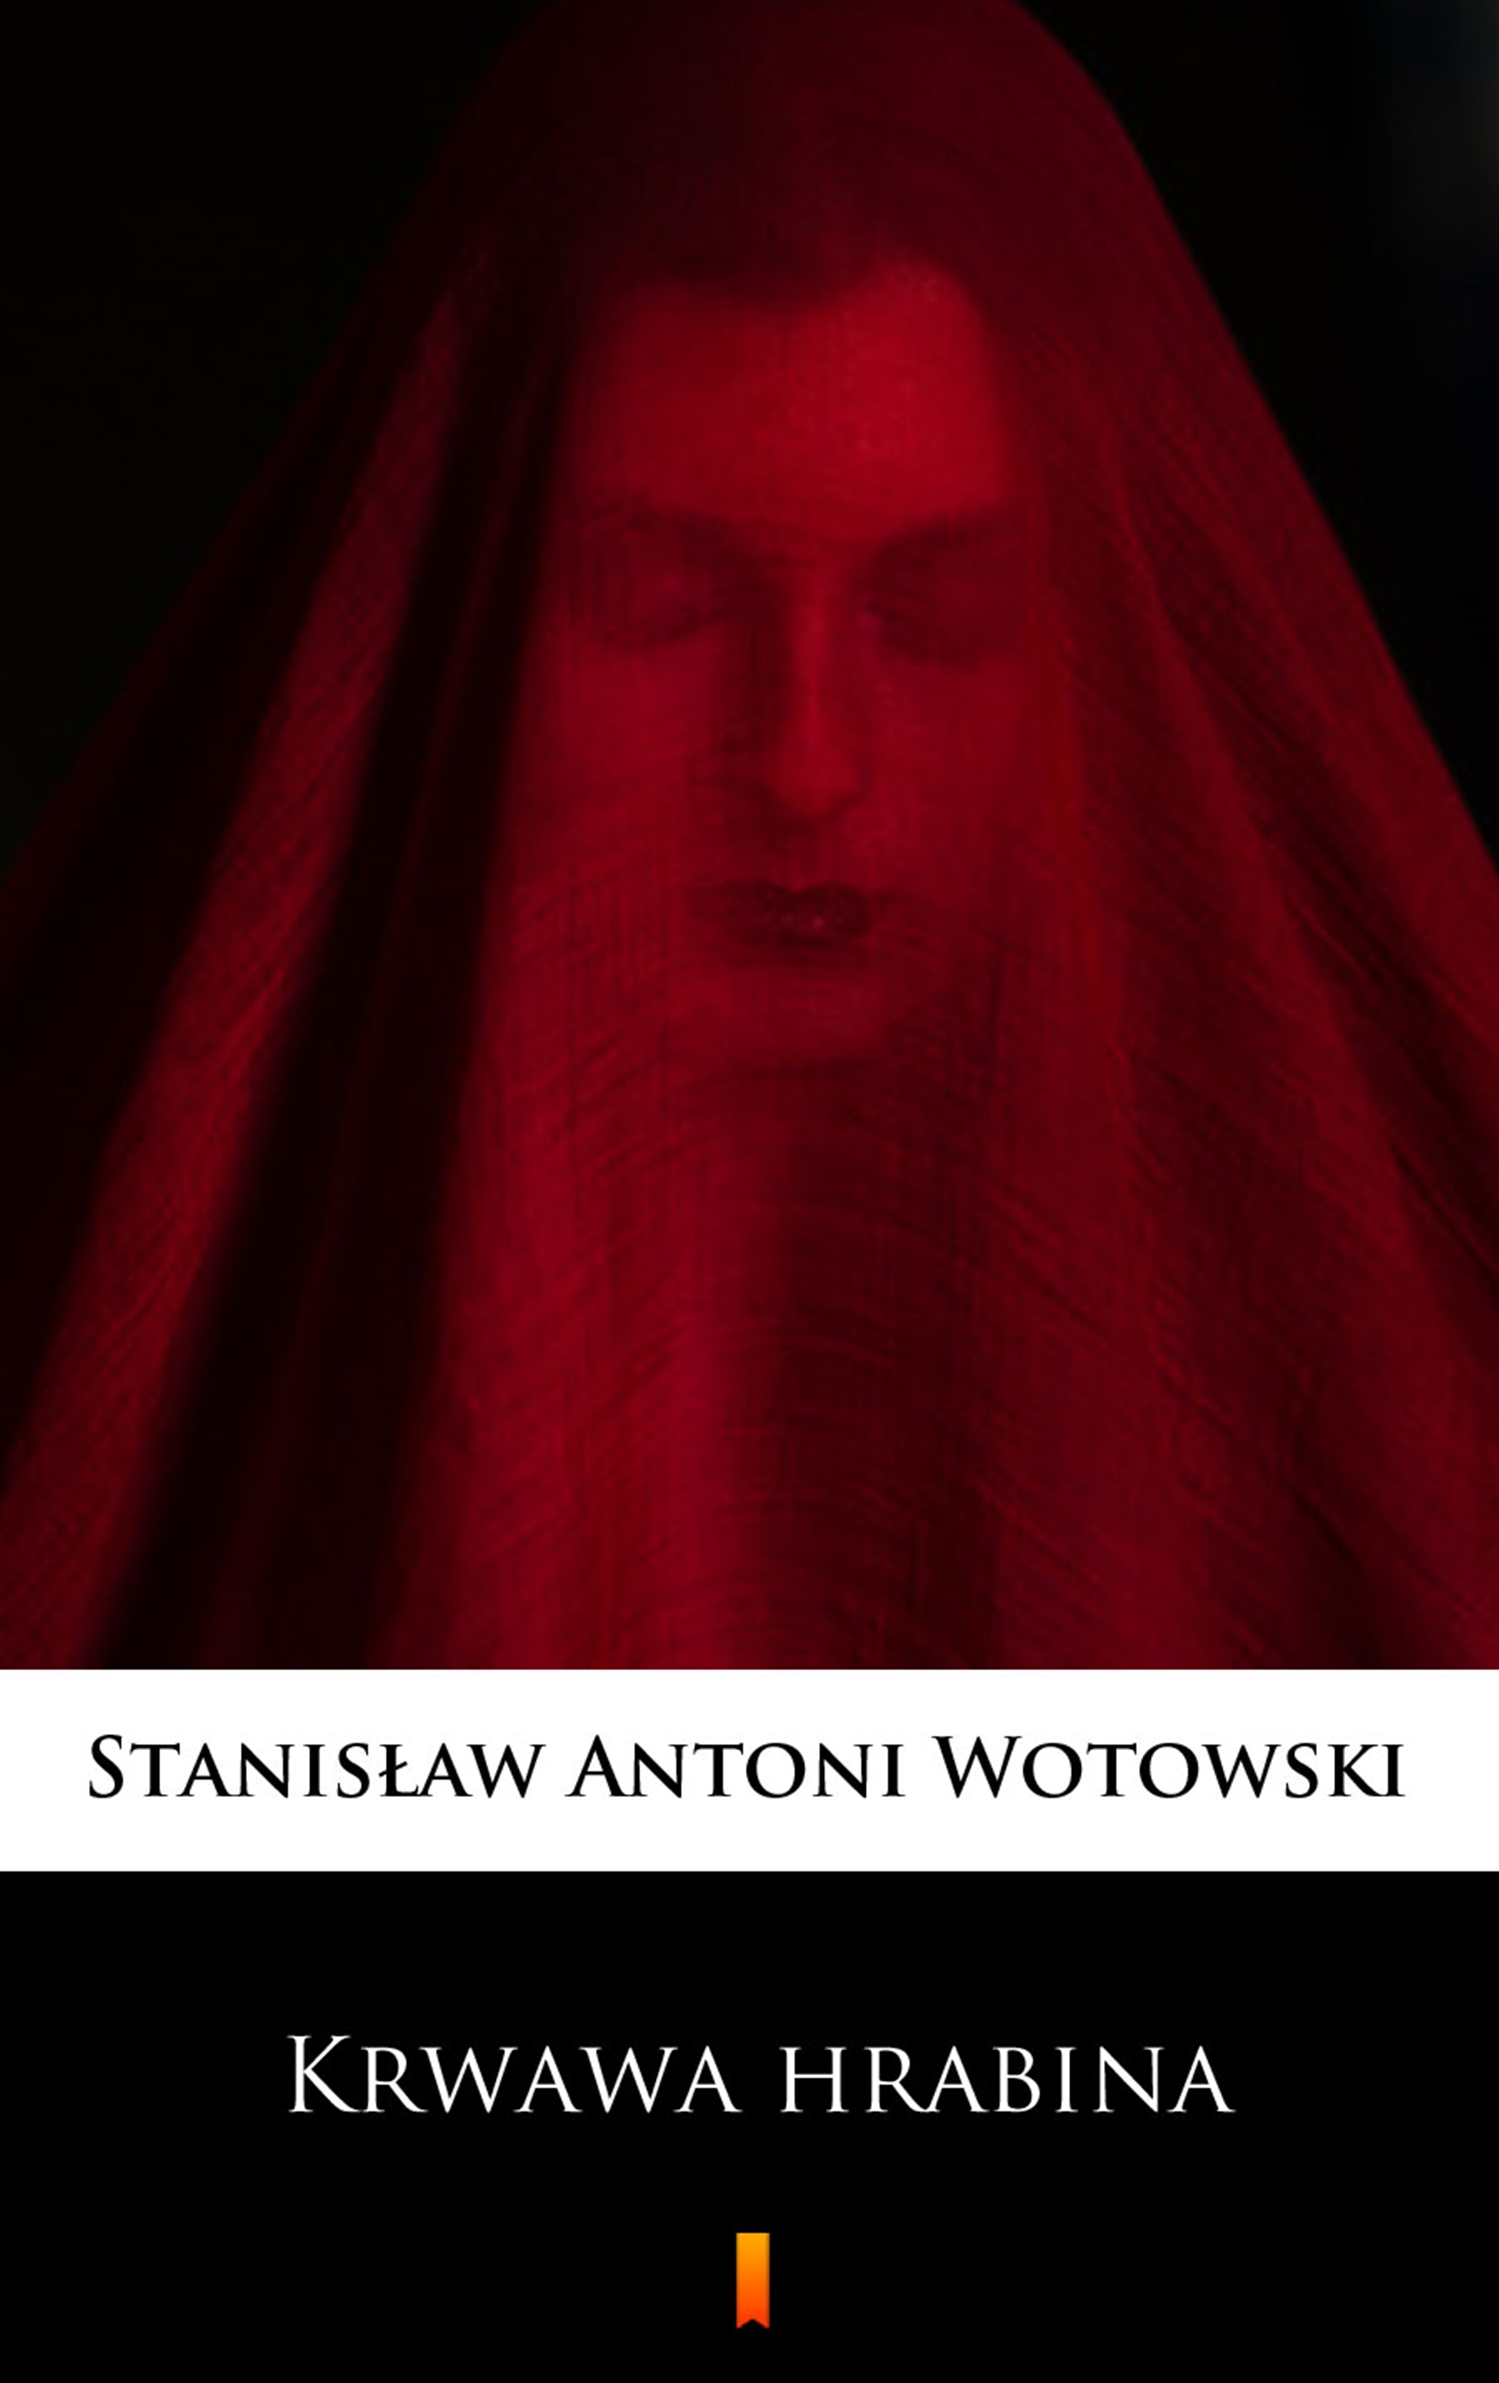 Скачать Krwawa hrabina - Stanisław Antoni Wotowski